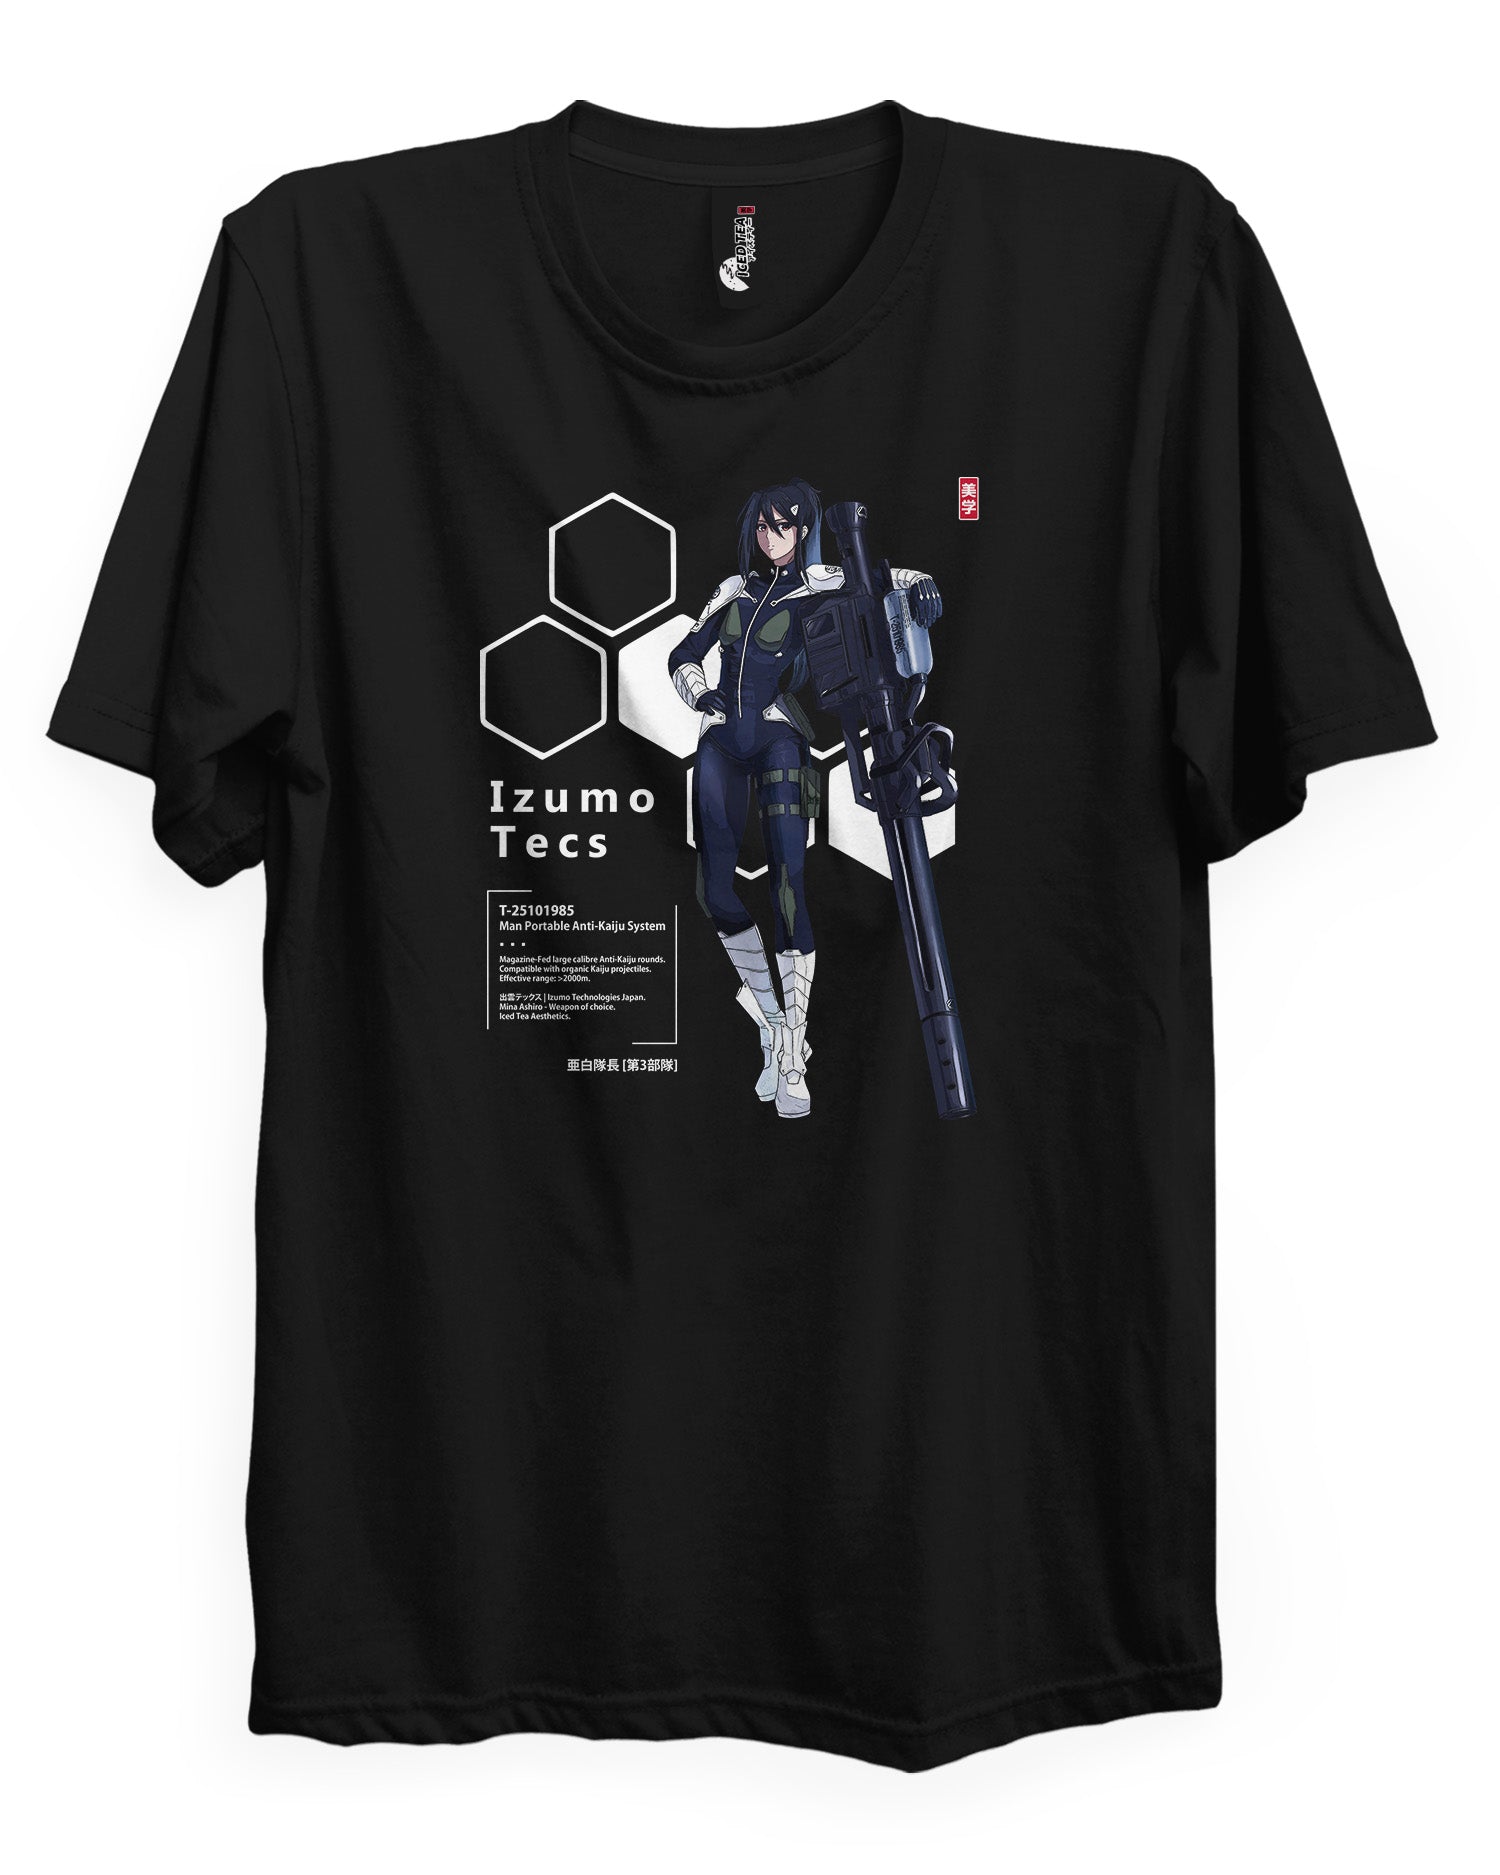 MINA [T-25101985] - T-Shirt